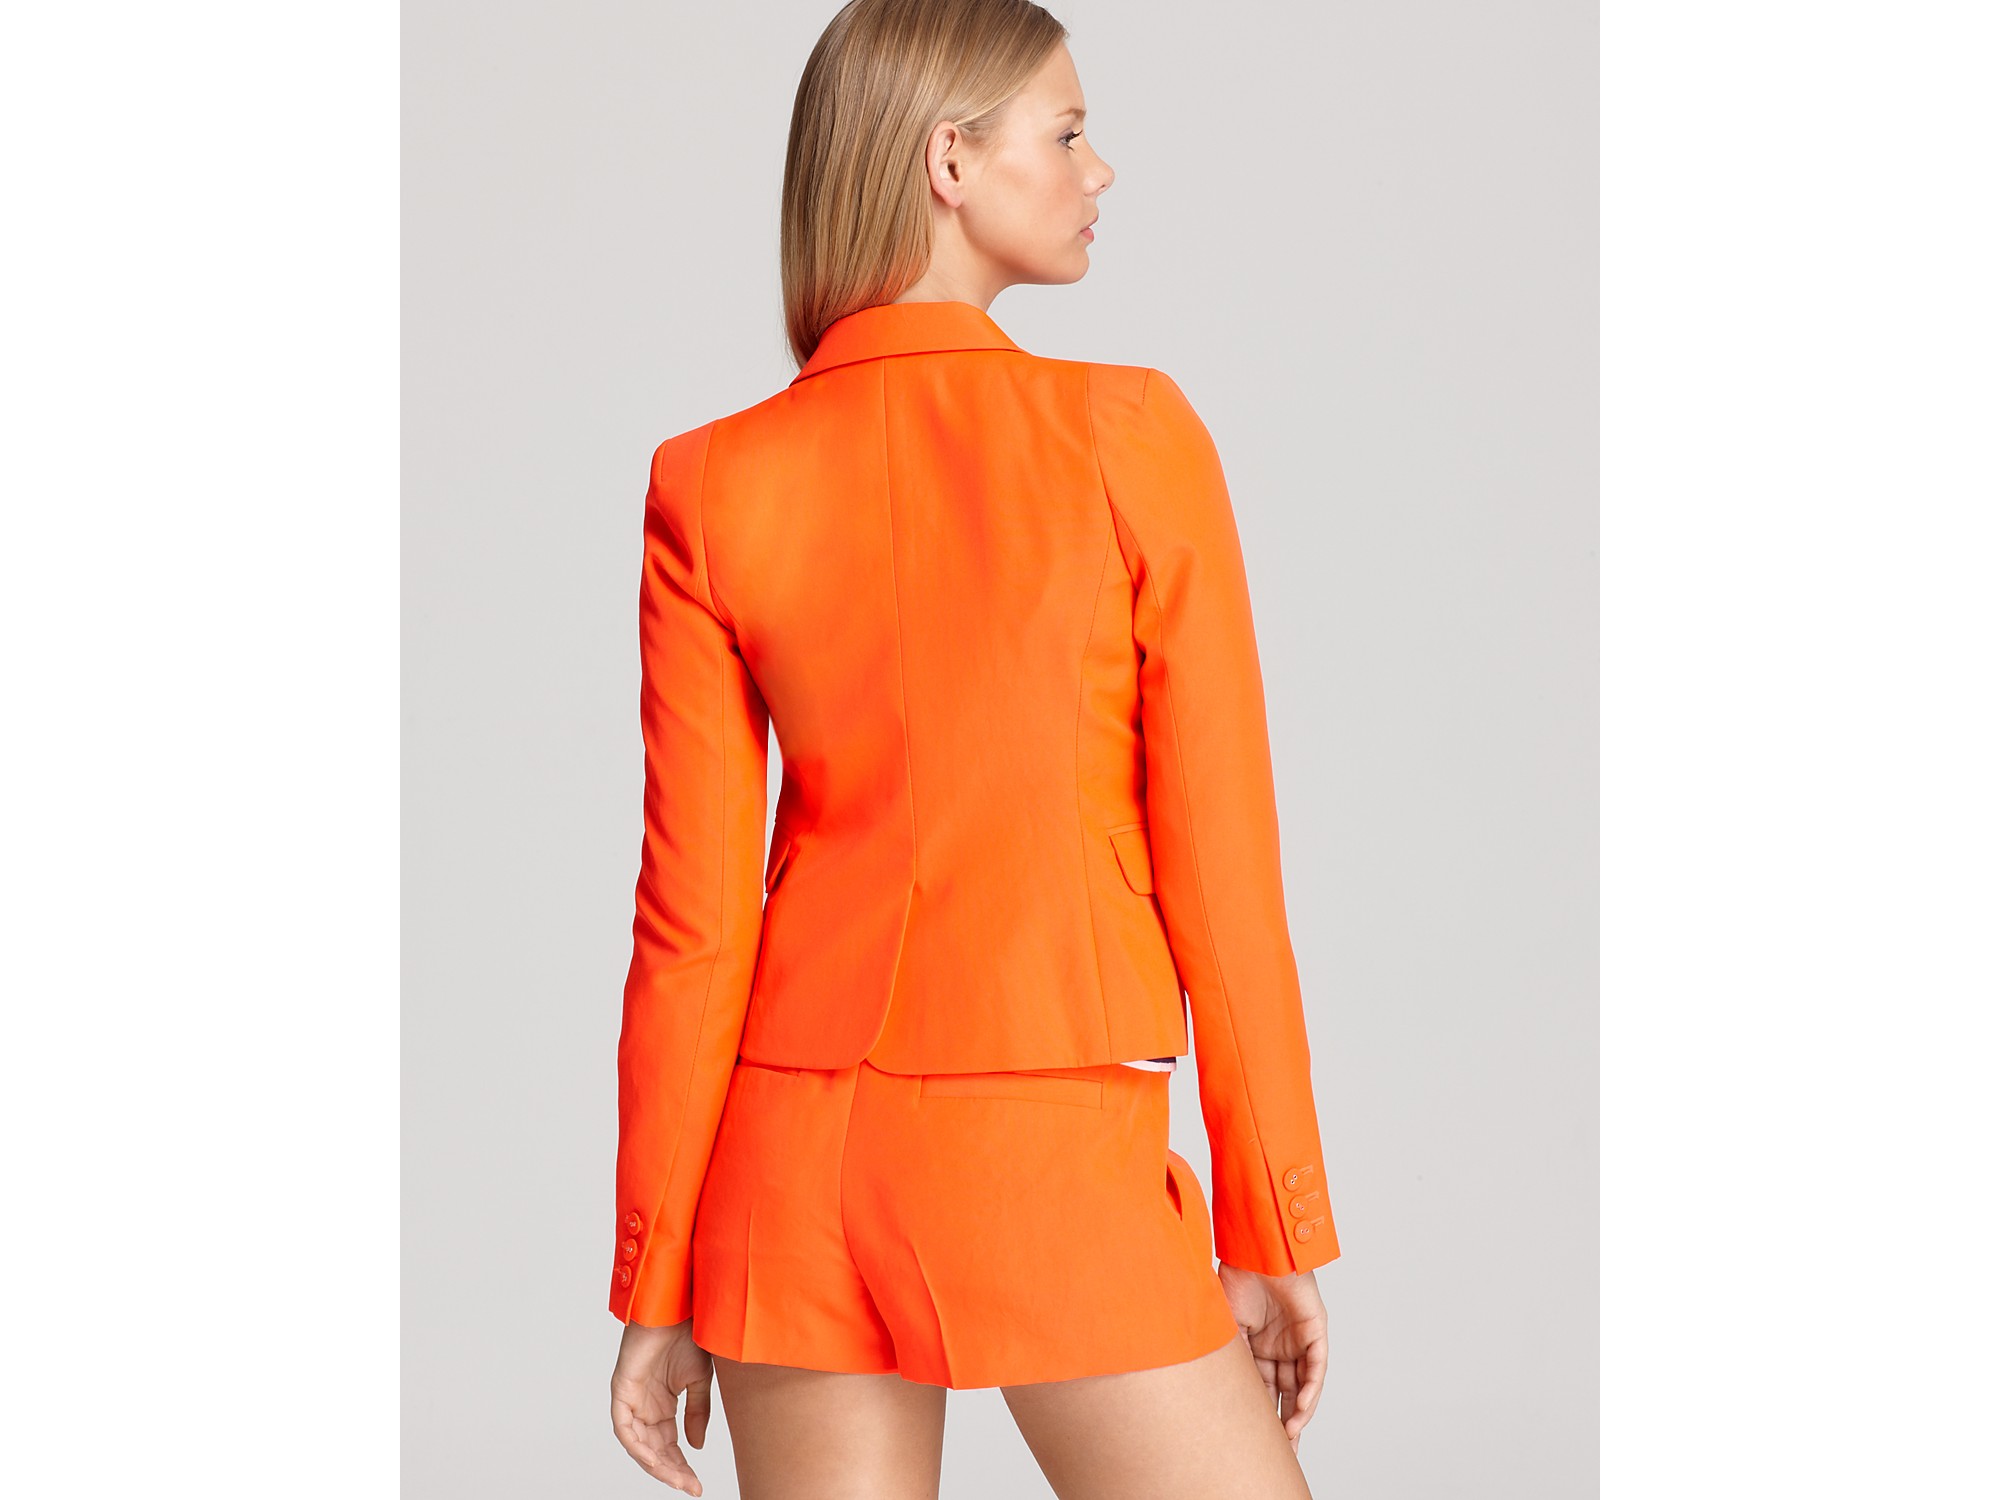 Juicy Couture Neon Blazer in Ultra Orange (Orange) - Lyst